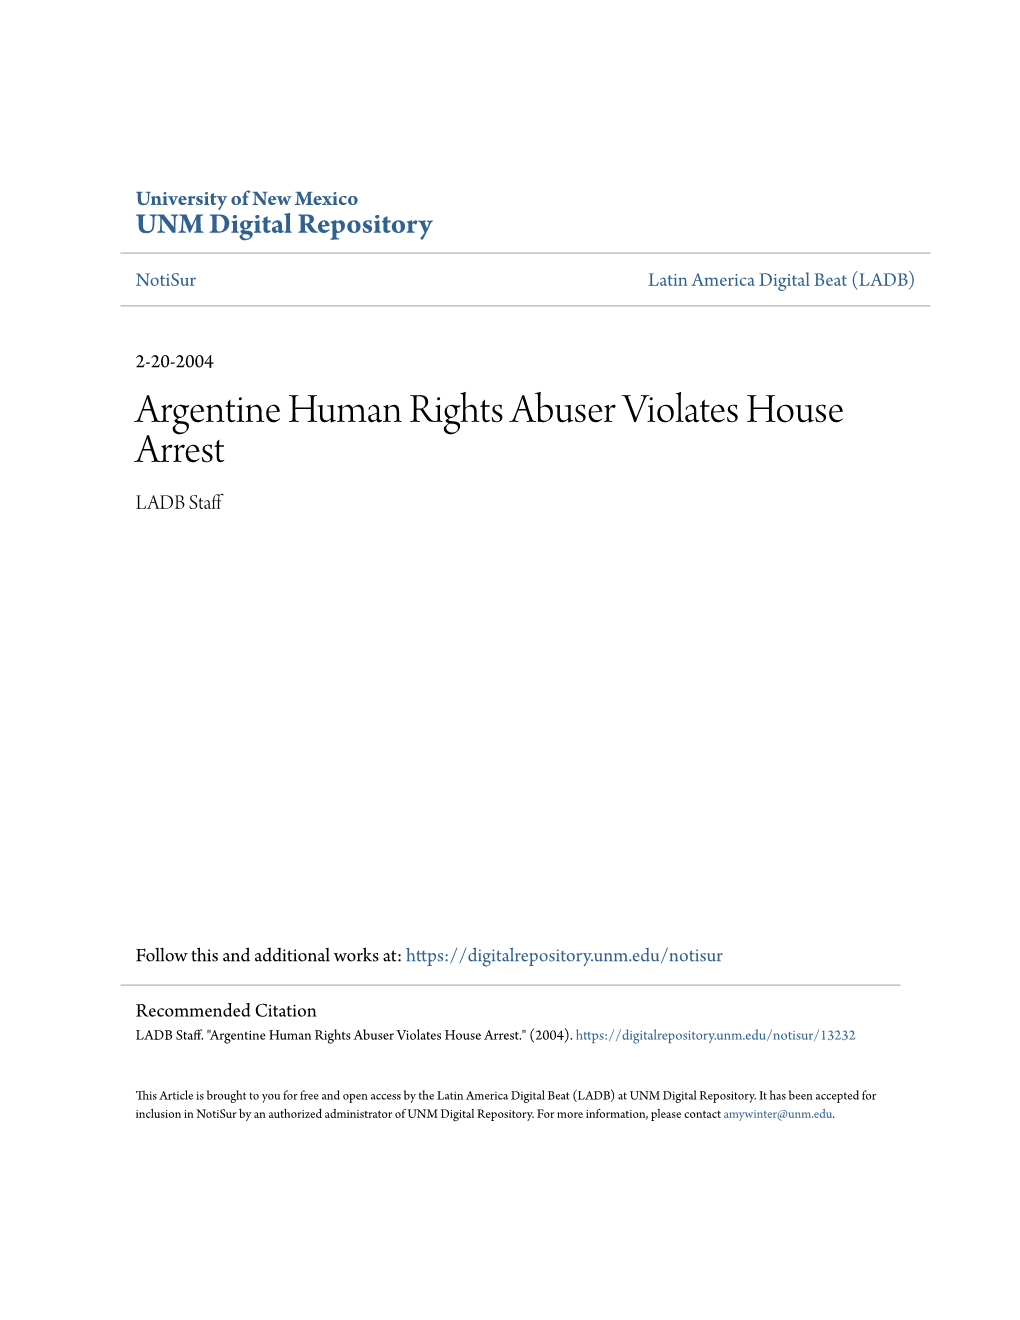 Argentine Human Rights Abuser Violates House Arrest LADB Staff